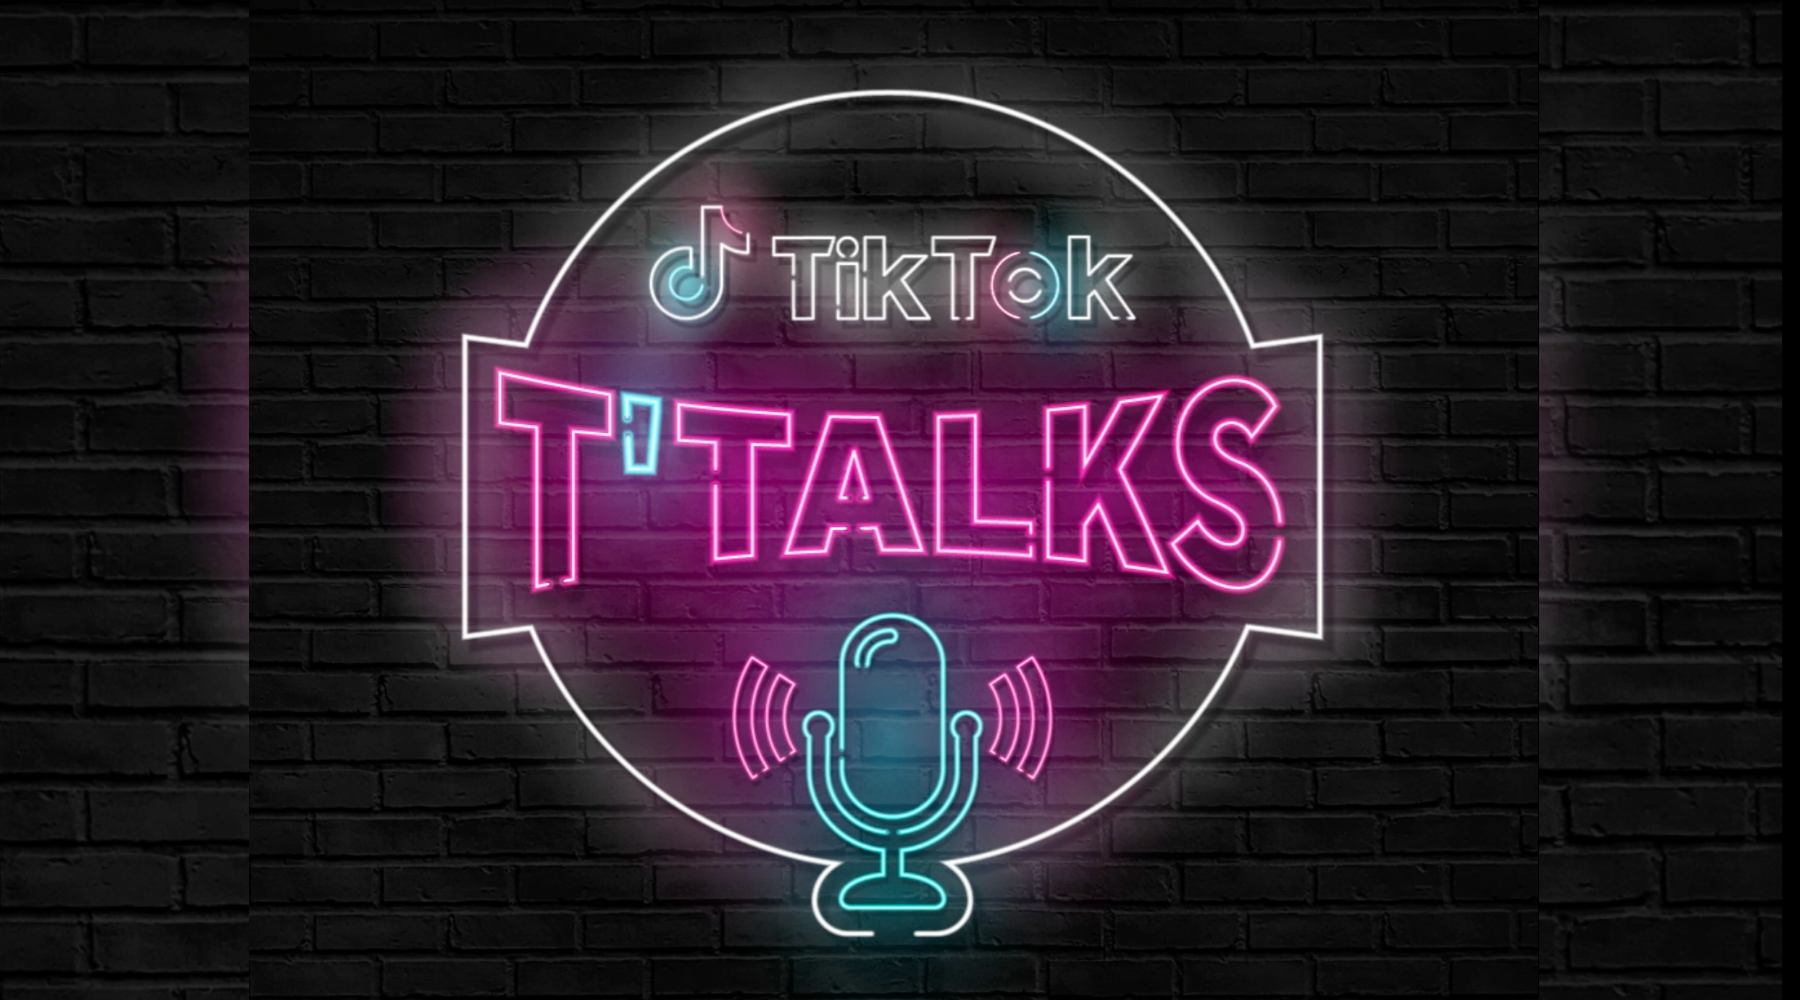 tiktok-places-lens-on-topics-that-matter-through-brand-new-t-talks-series